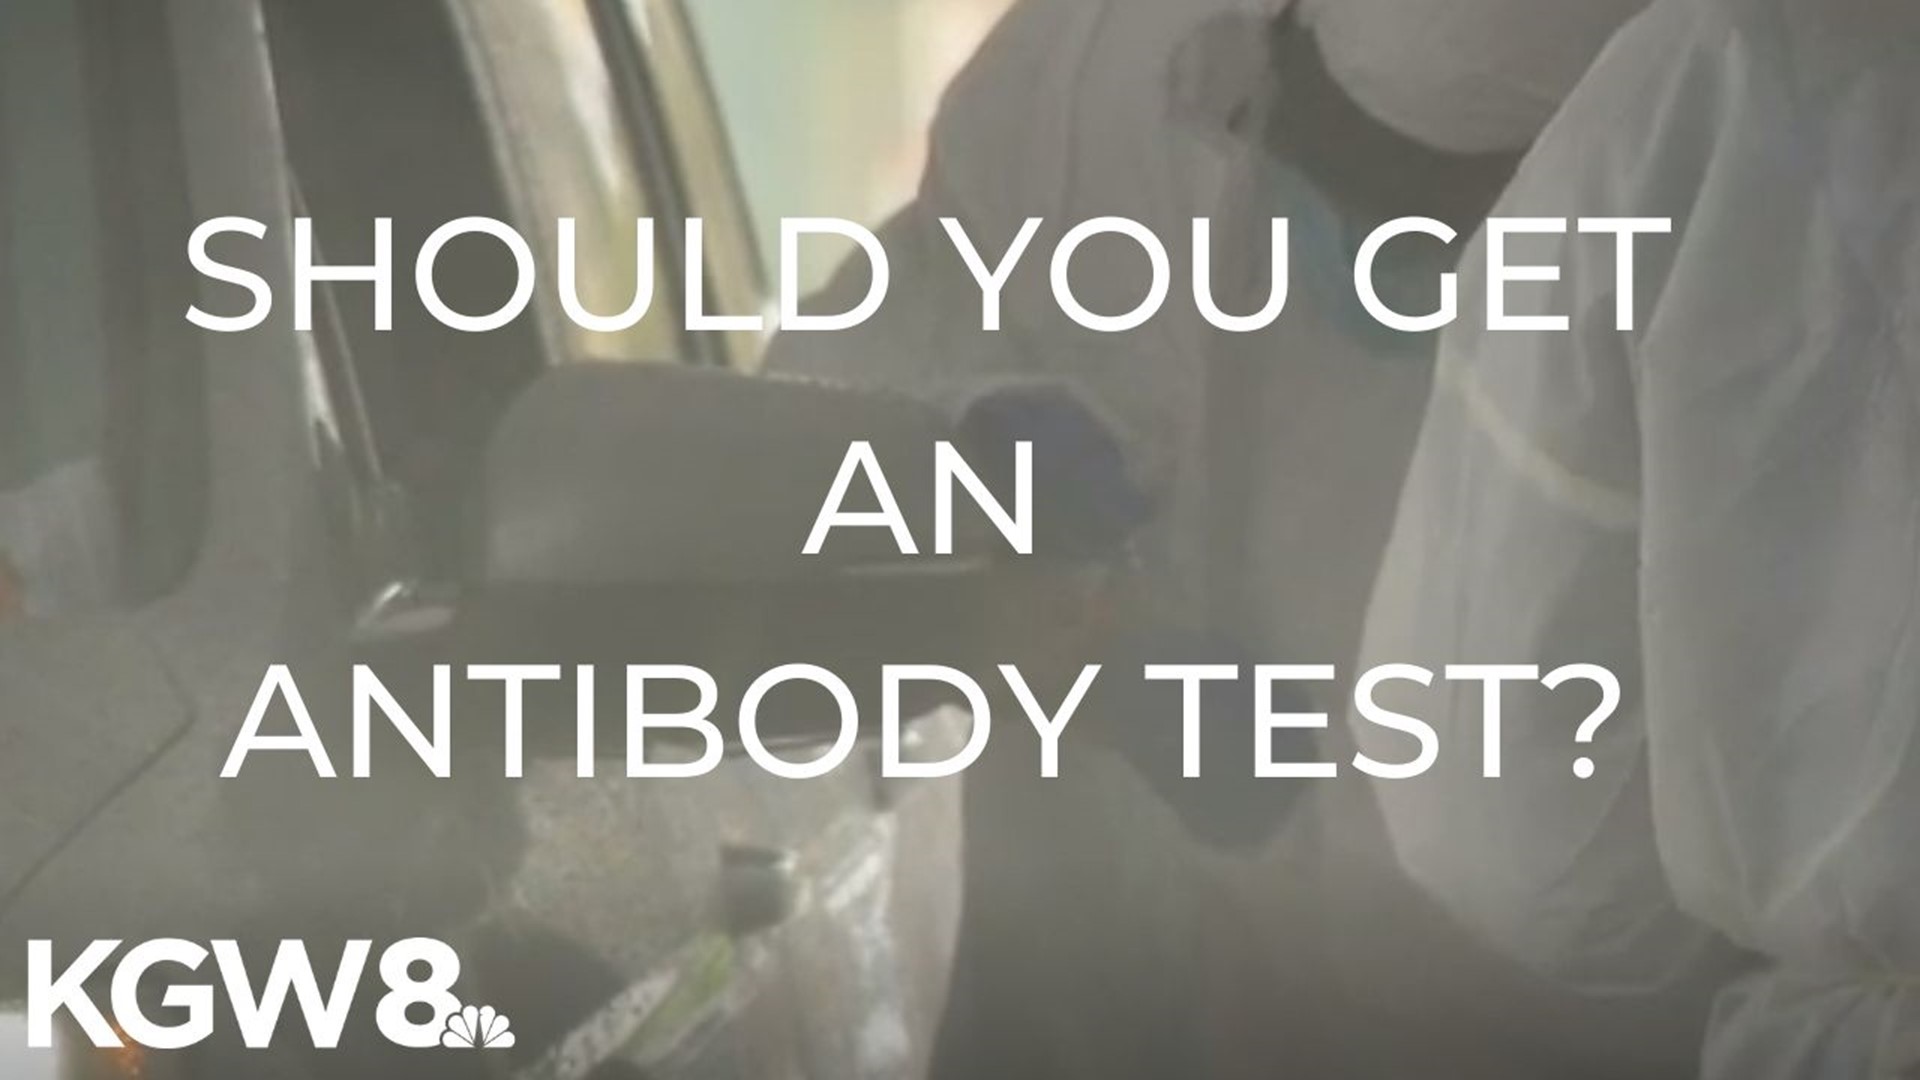 When is antibody testing coming to Oregon? Should you get it? Pat Dooris explains.